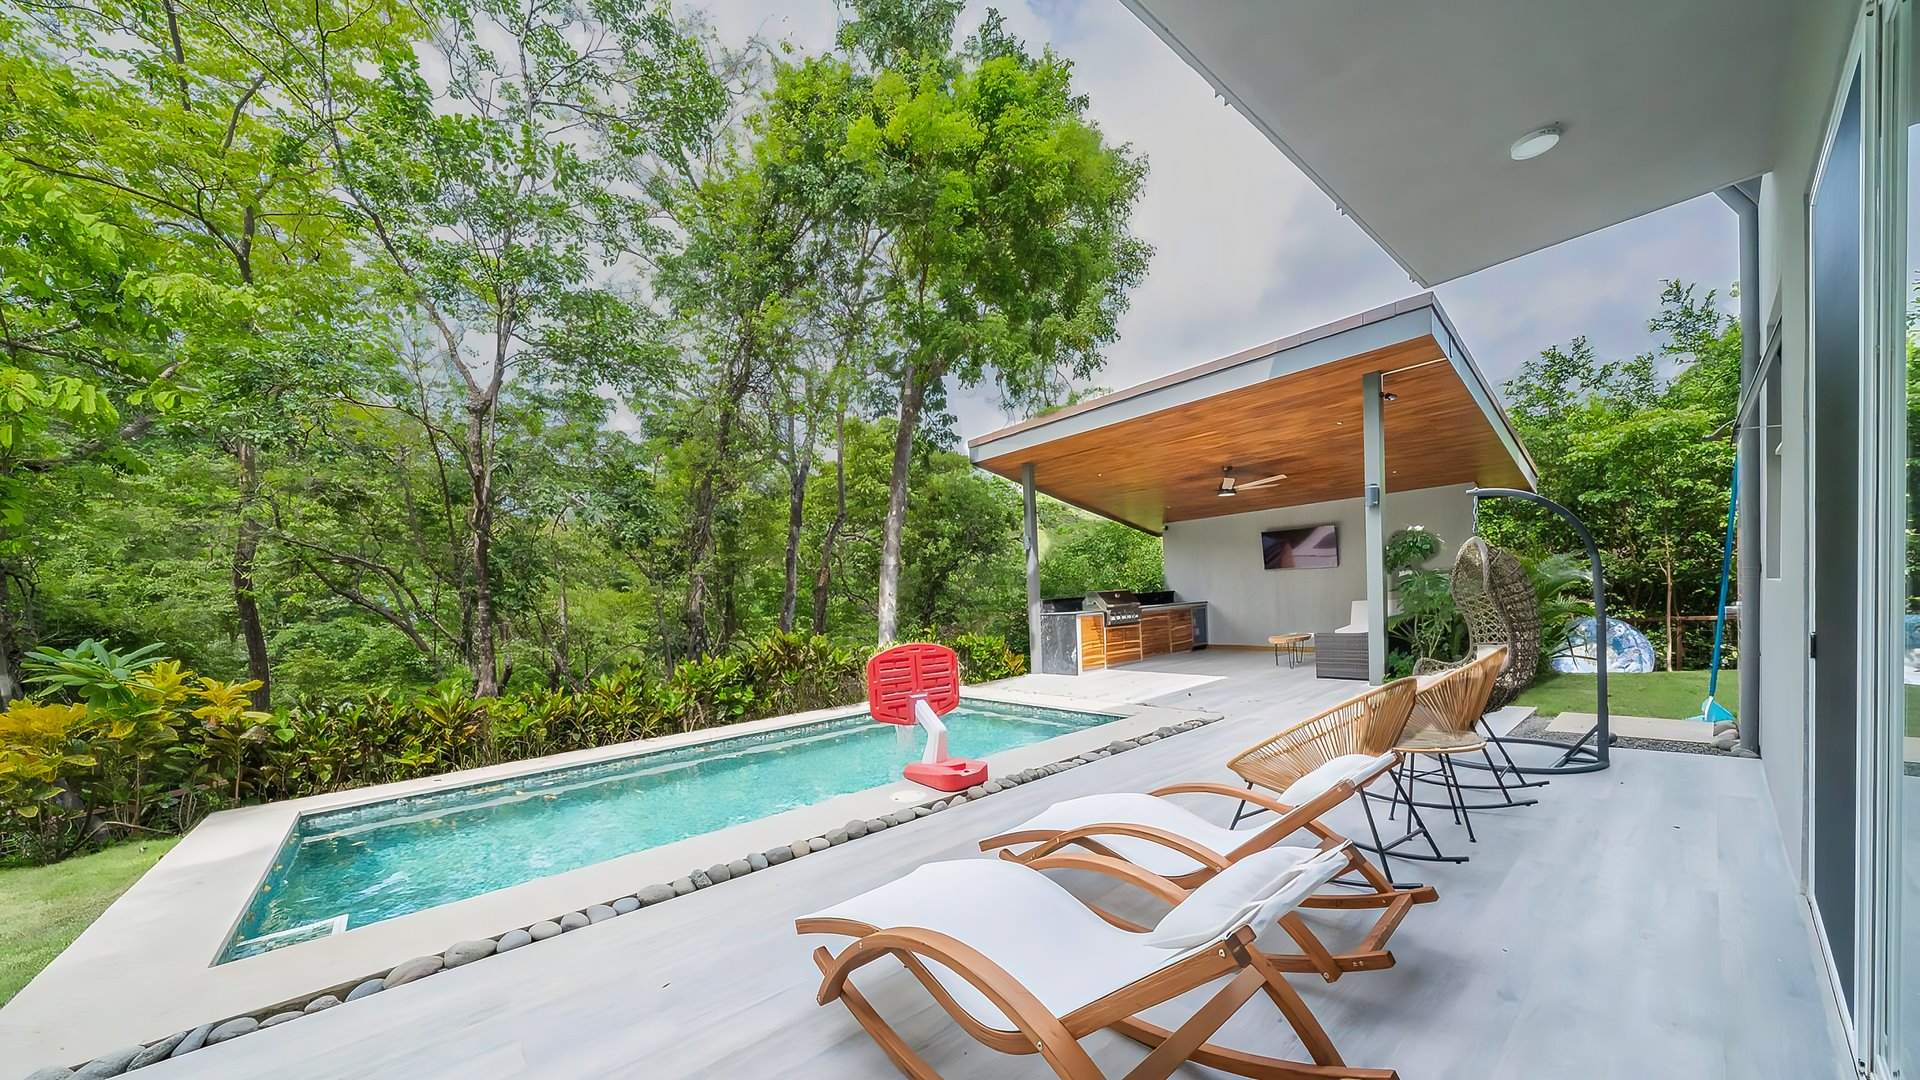 10266-La piscine et la terrasse de la maison à Playa Grande au Costa Rica